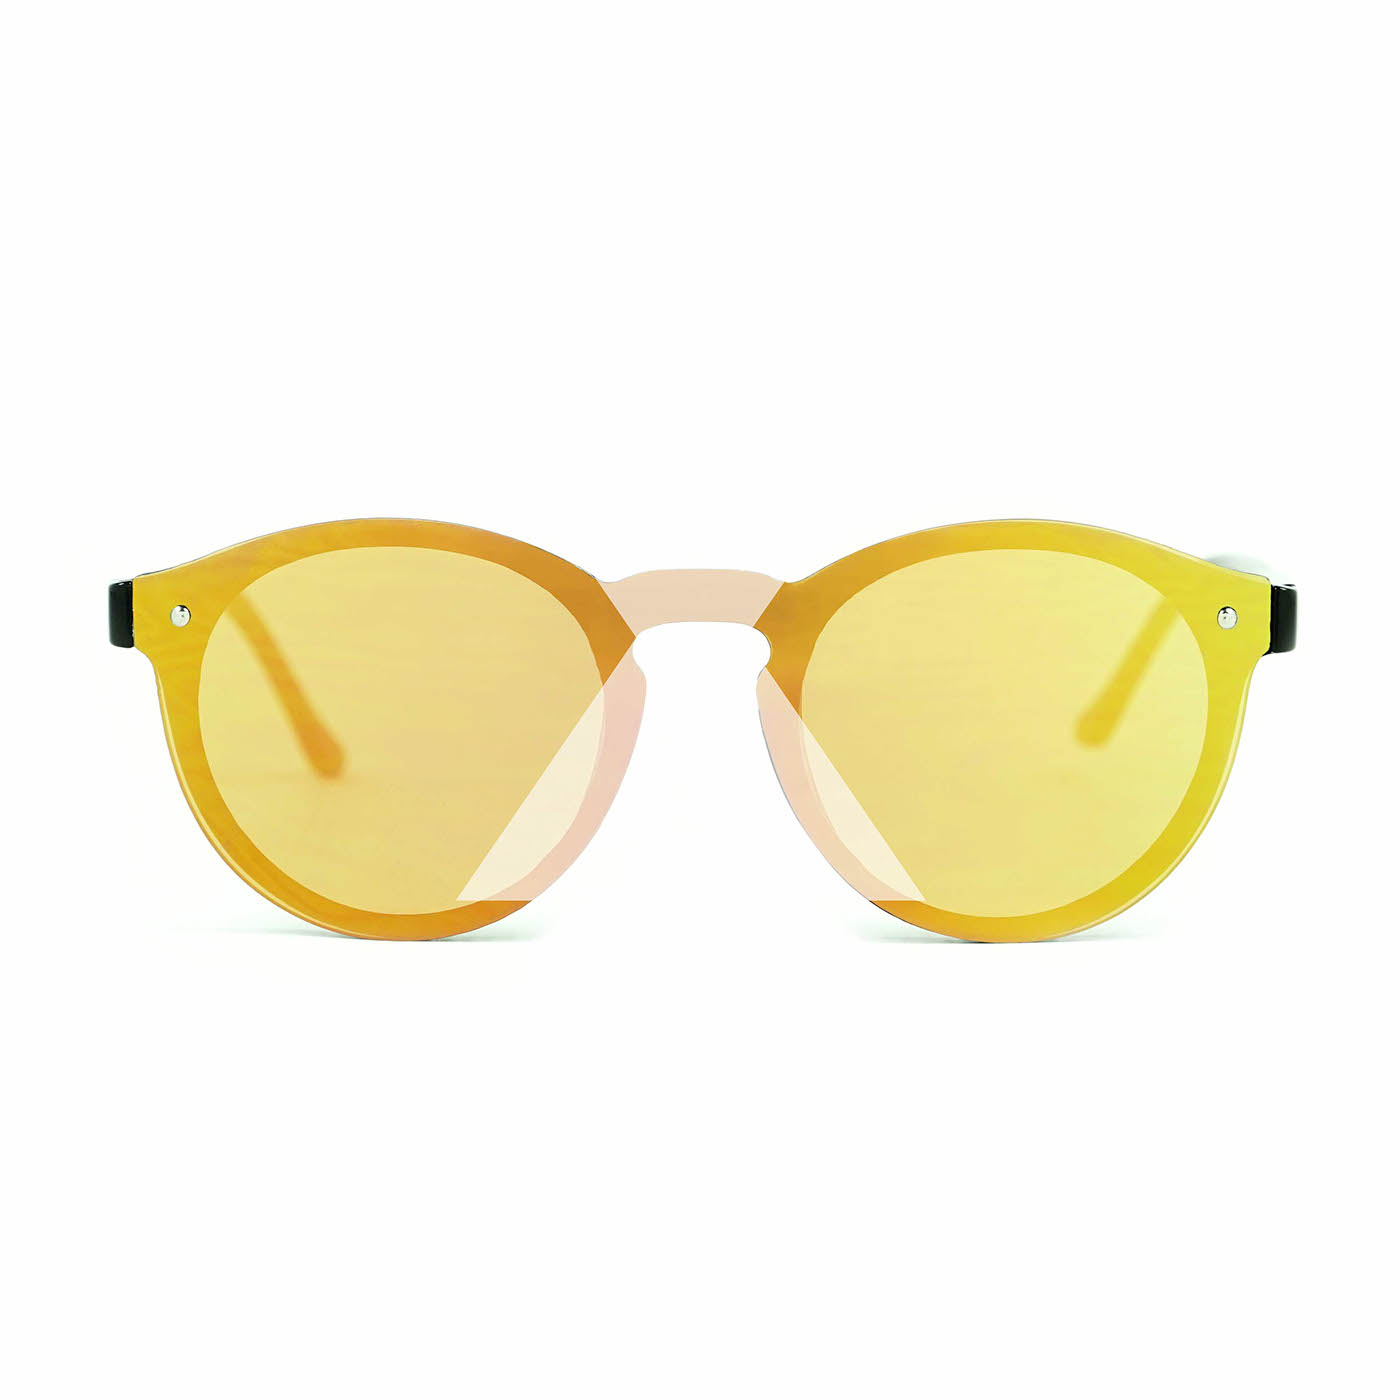 Sunglasses photo ad publish moda wear bennett advertisement